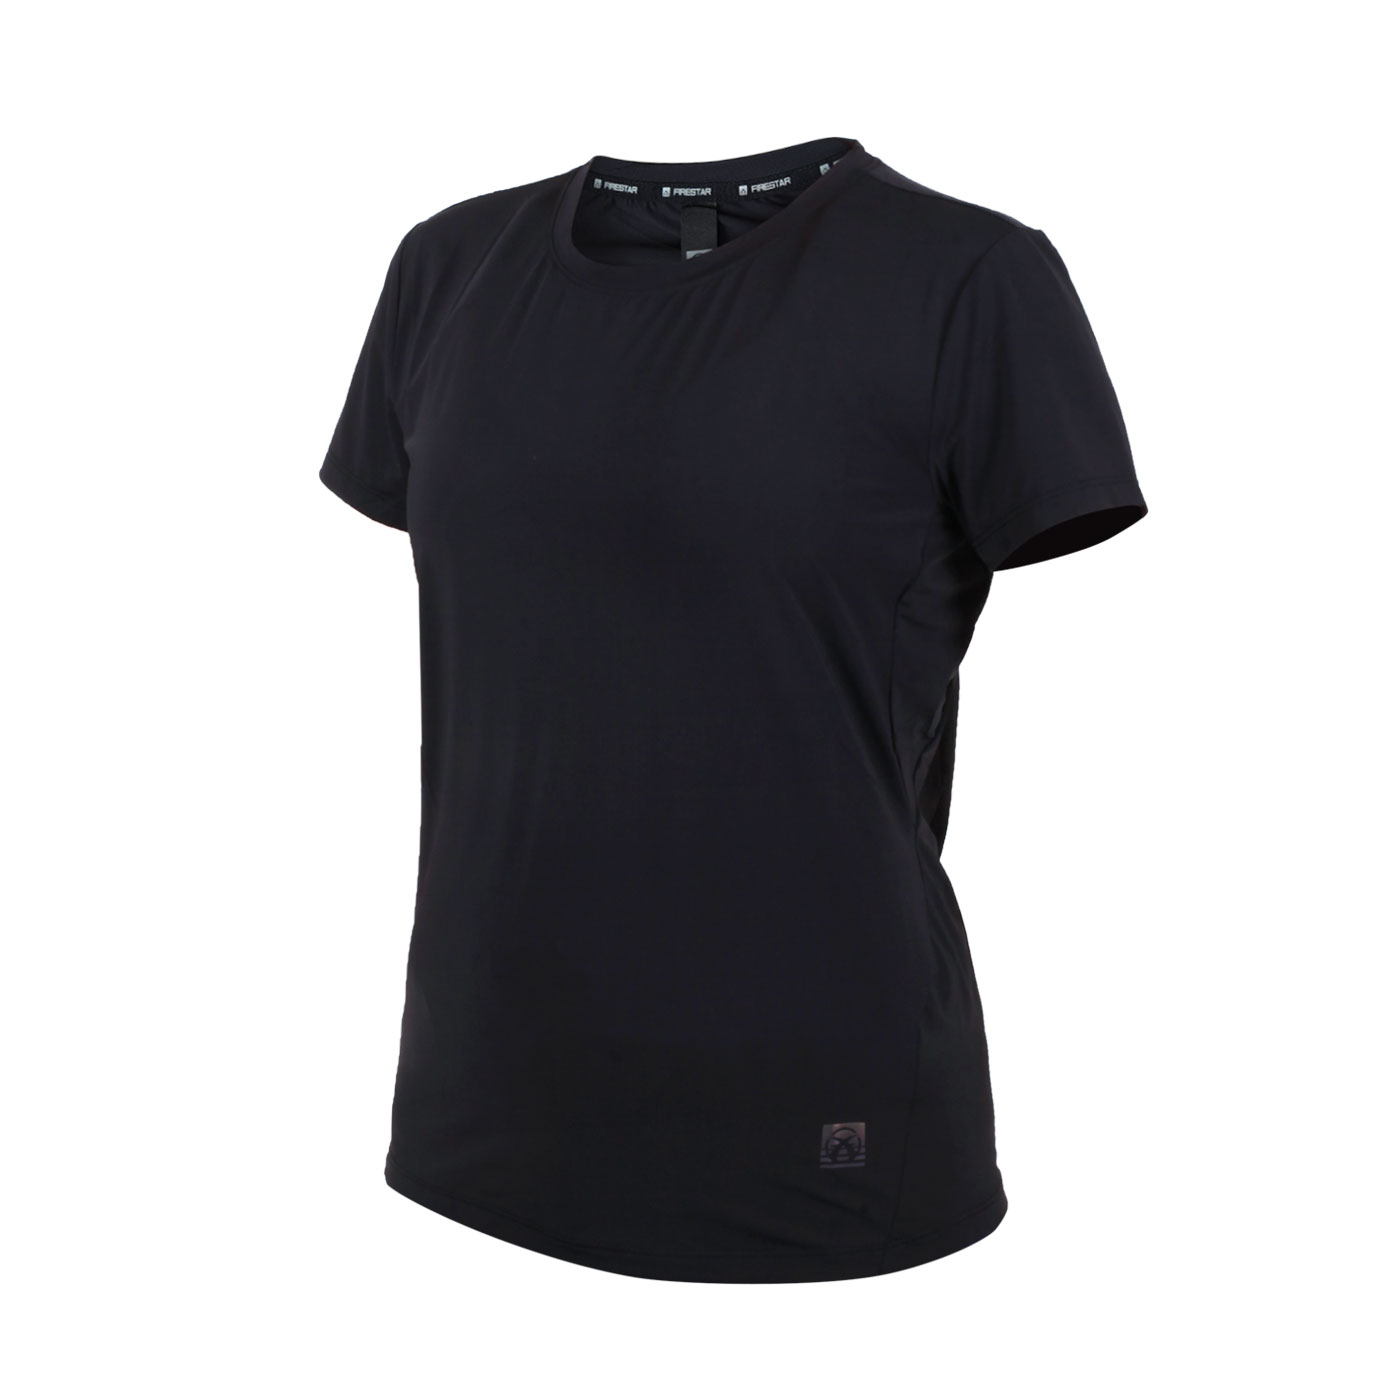 FIRESTAR 女款彈性圓領短袖T恤 DL261-10 - 黑